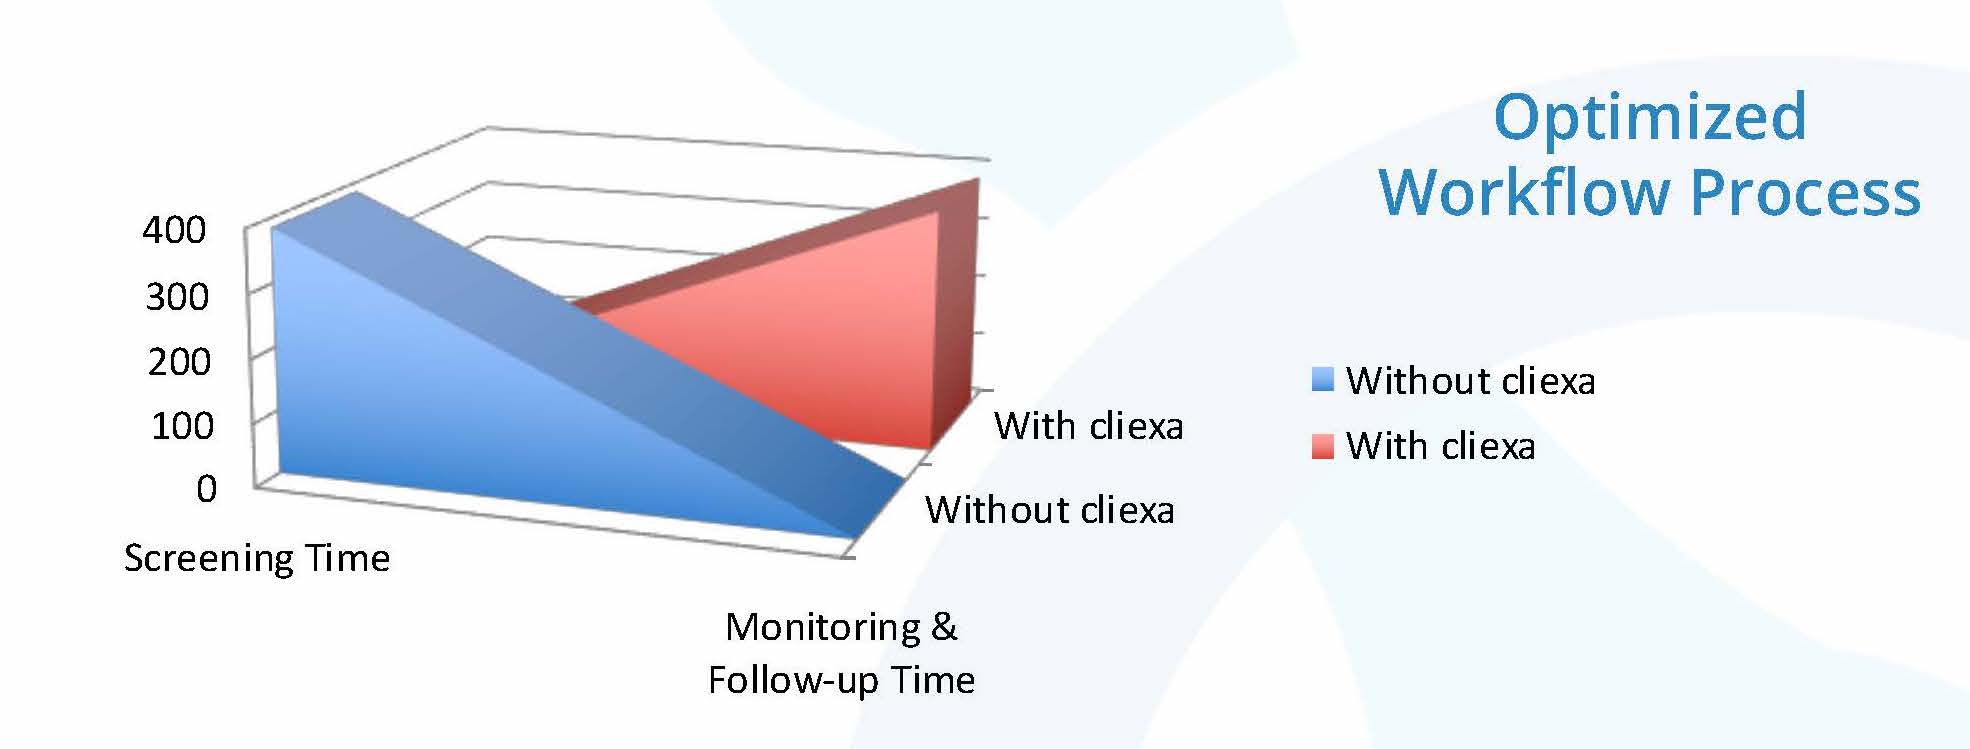 cliexa Title X Toolkit - Optimized Workflow Process